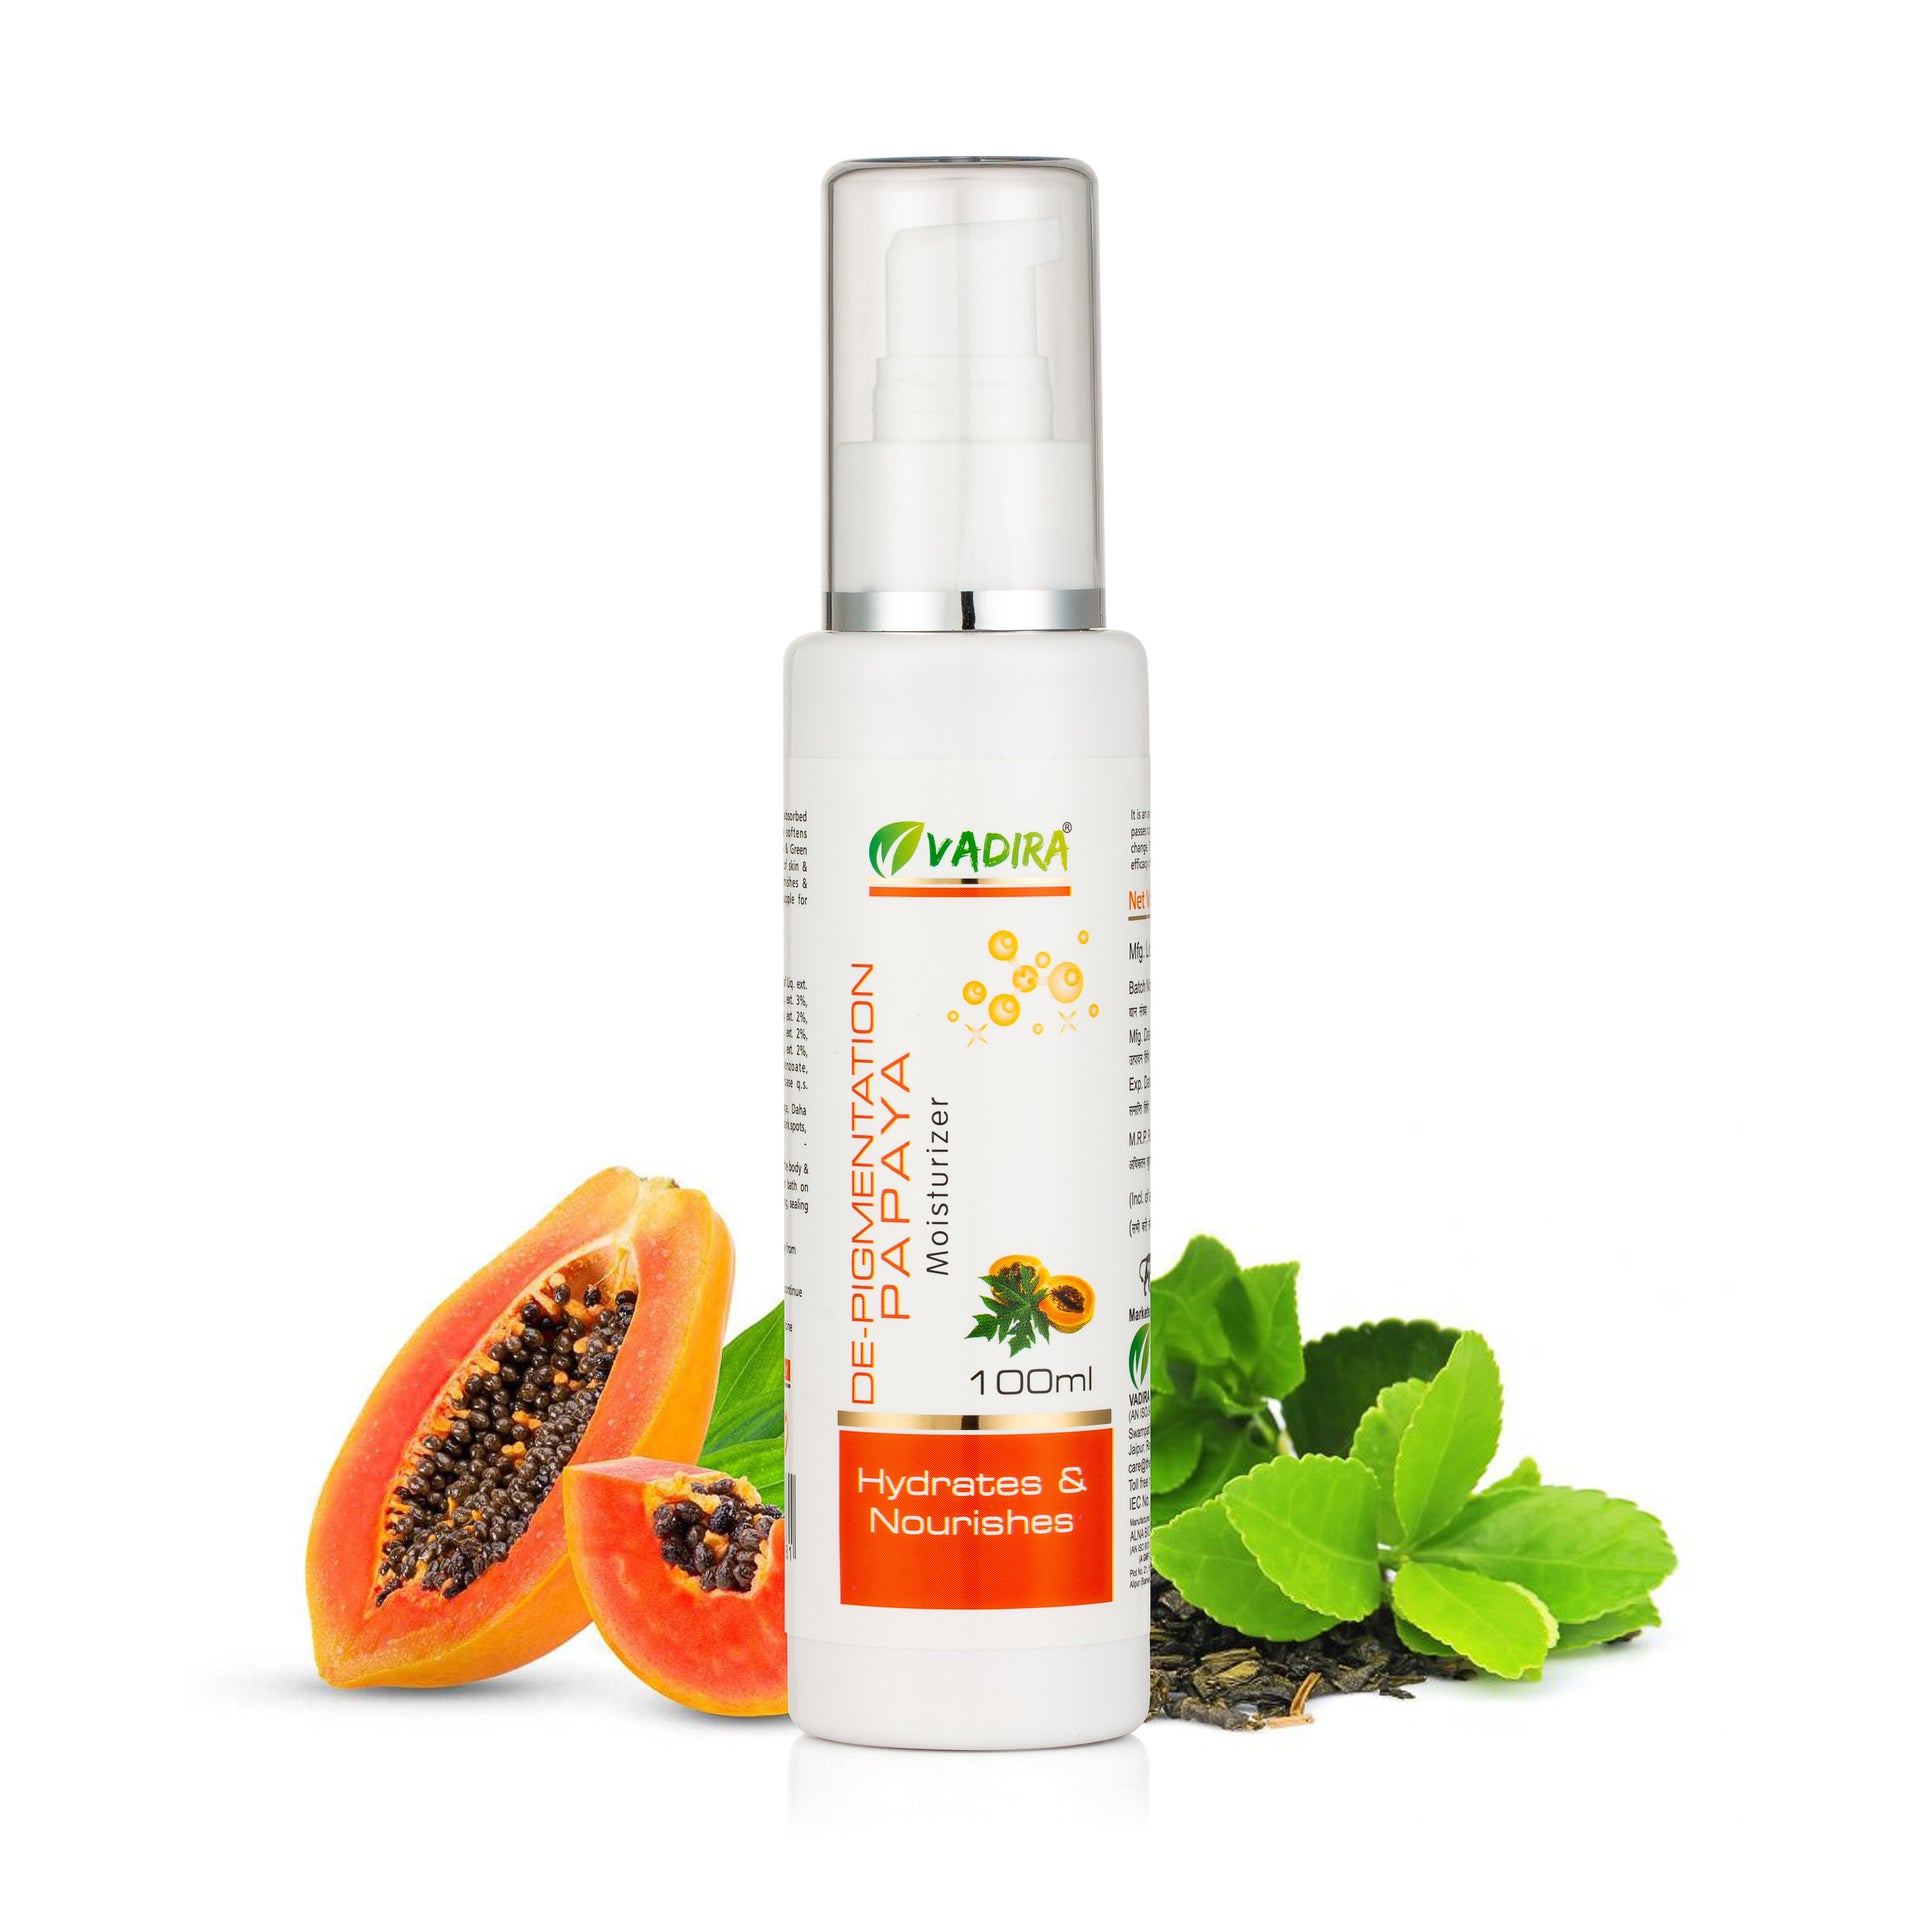 Vadira Papaya moisturizer